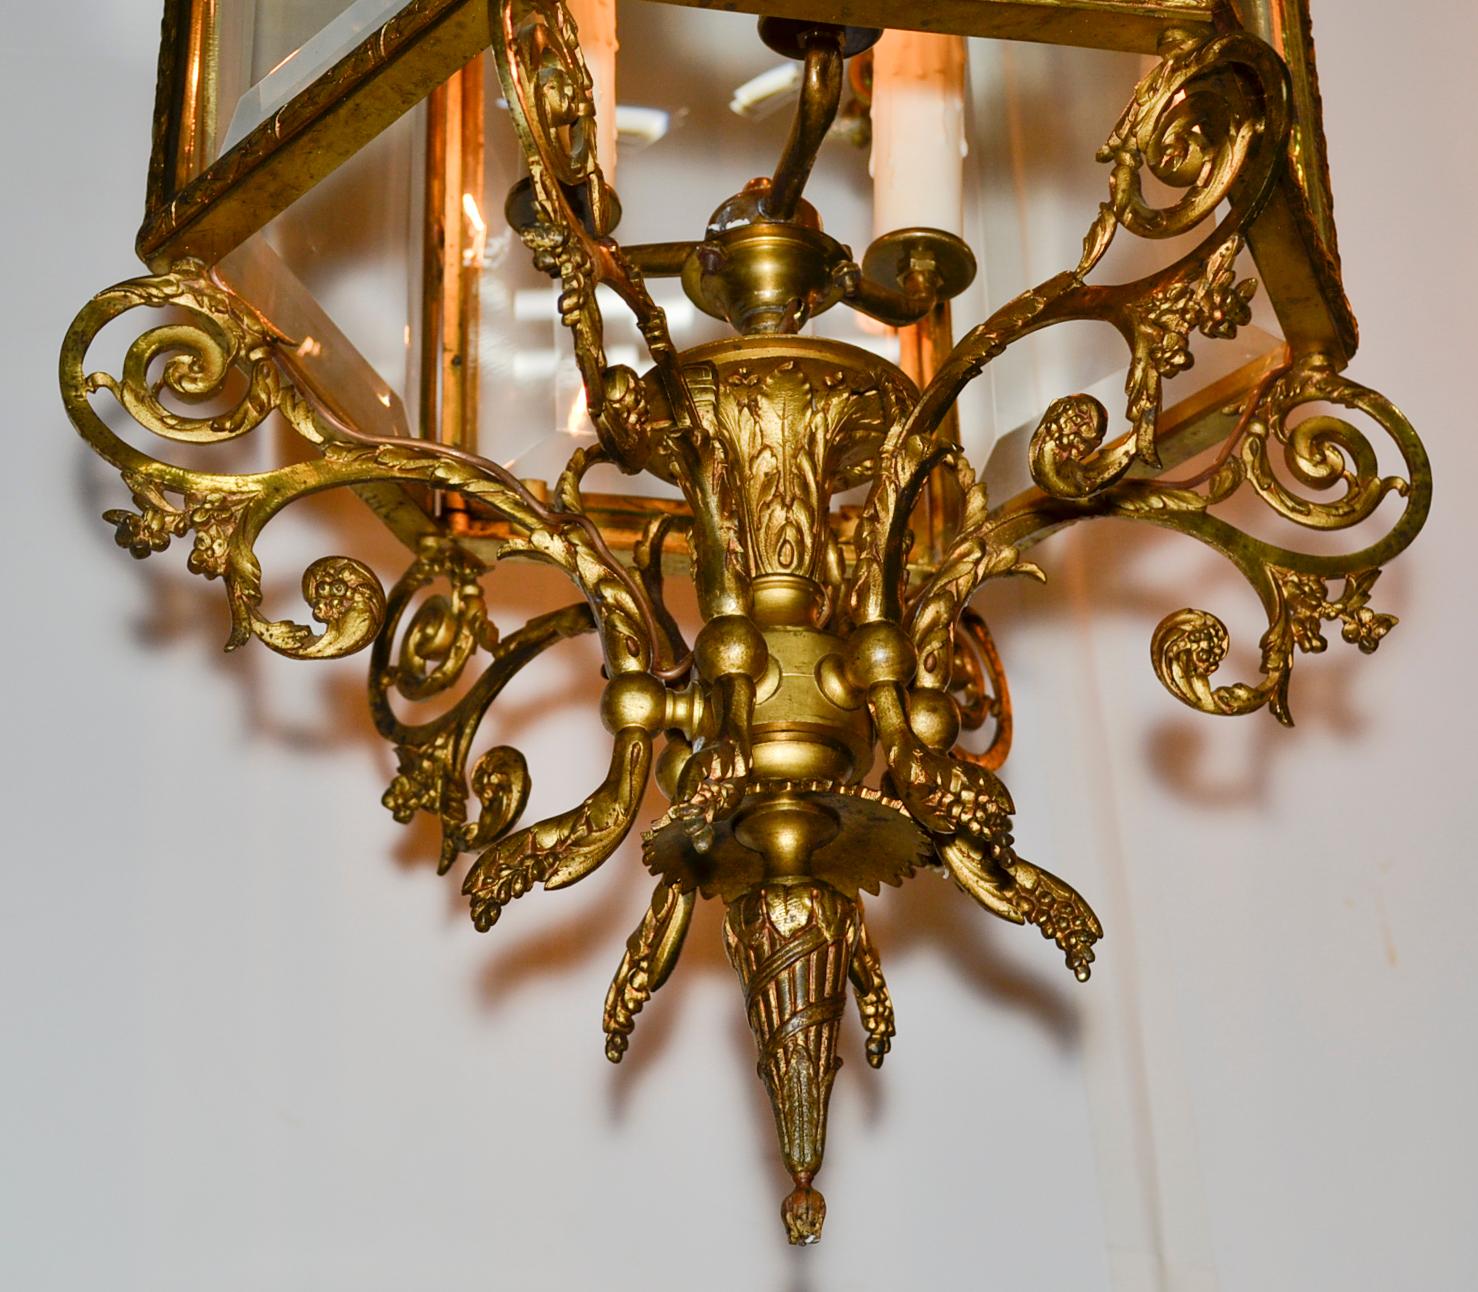 Quality 19th century French Louis XVI gilt bronze lantern with beveled glass panels.